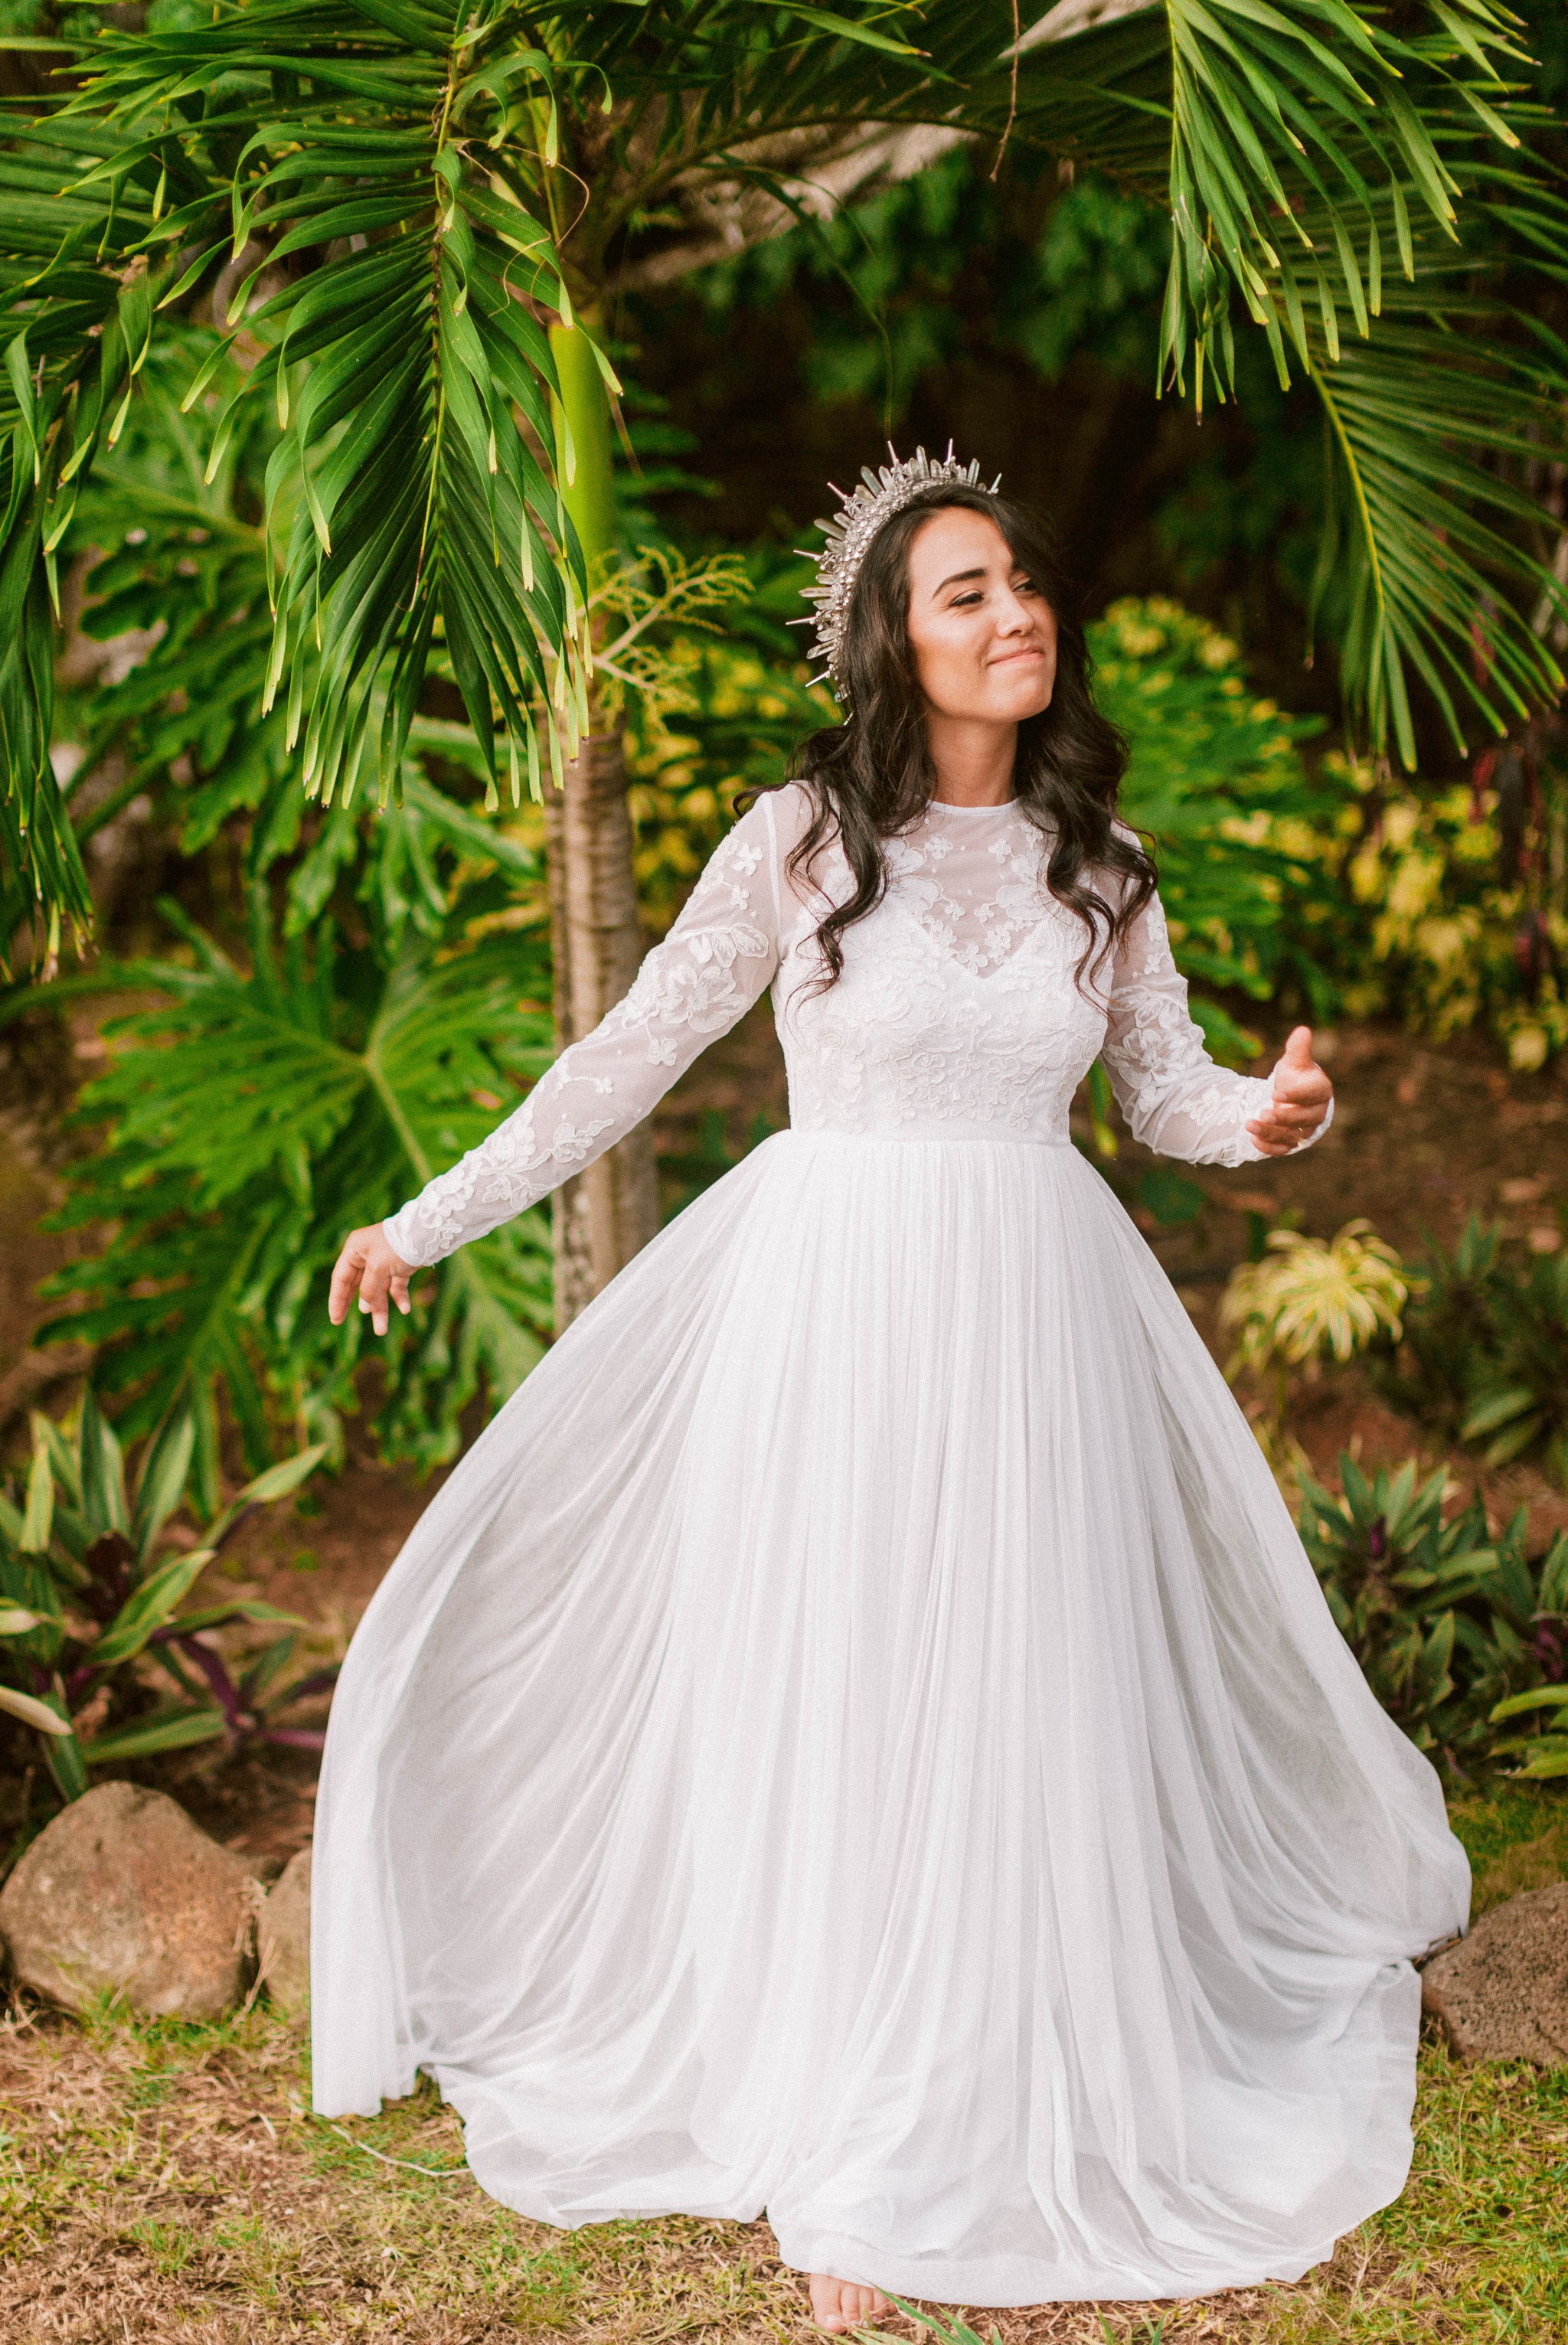  Hawaiian Bridal Portraits - Bride is wearing a wedding dress by asos and a unique crown under palm trees - Ana + Elijah - Wedding at Loulu Palm in Haleiwa, HI - Oahu Hawaii Wedding Photographer - #hawaiiweddingphotographer #oahuweddings #hawaiiweddi